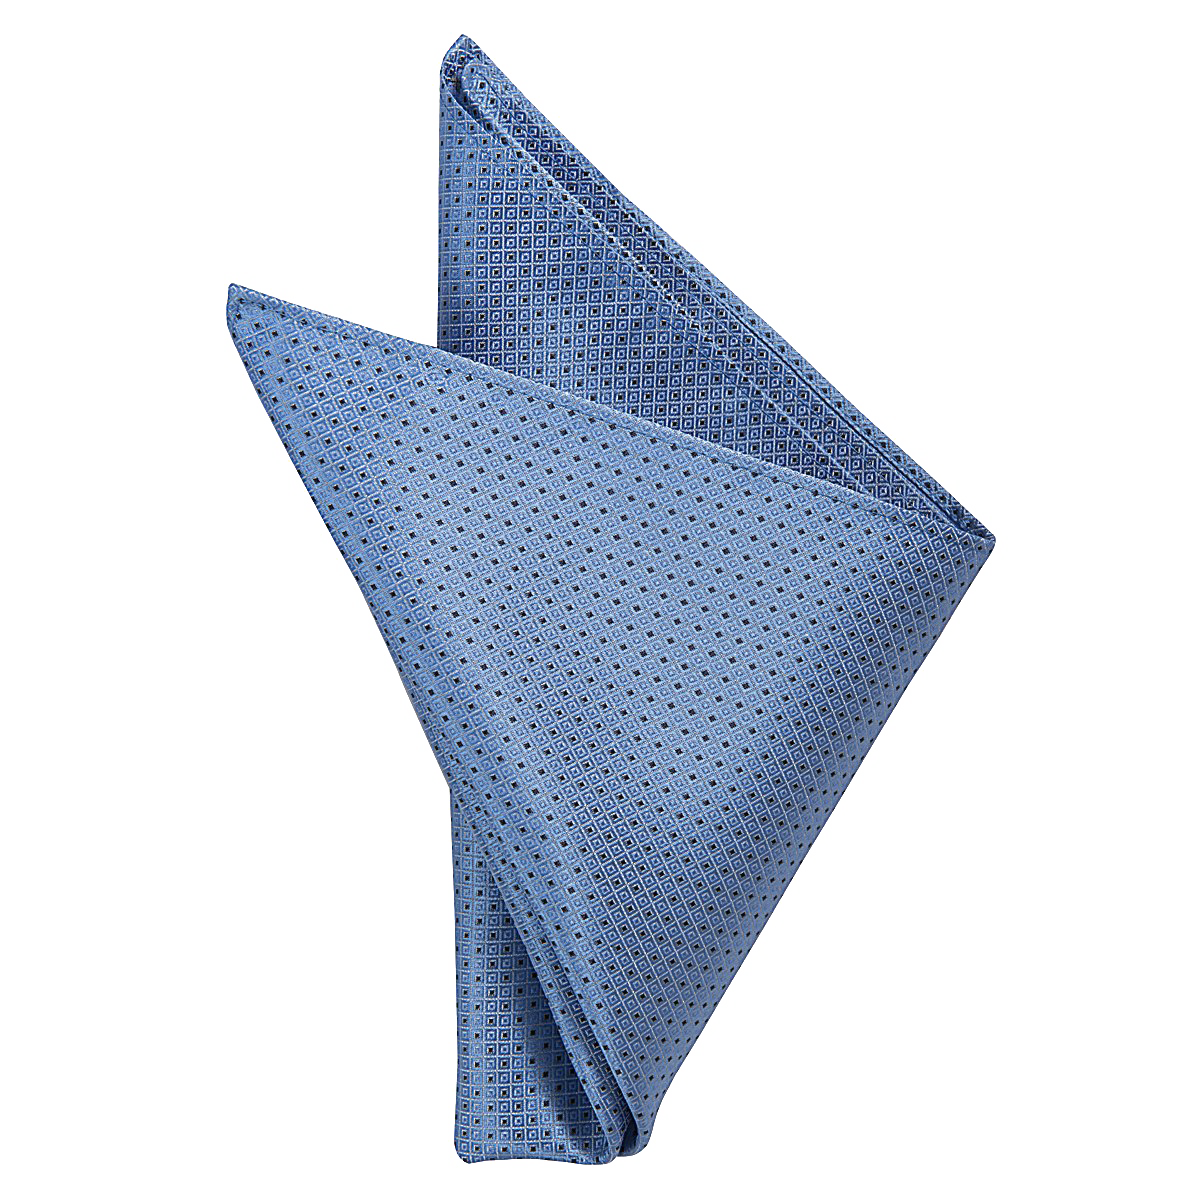 Handkerchief PNG HD and Transparent pngteam.com